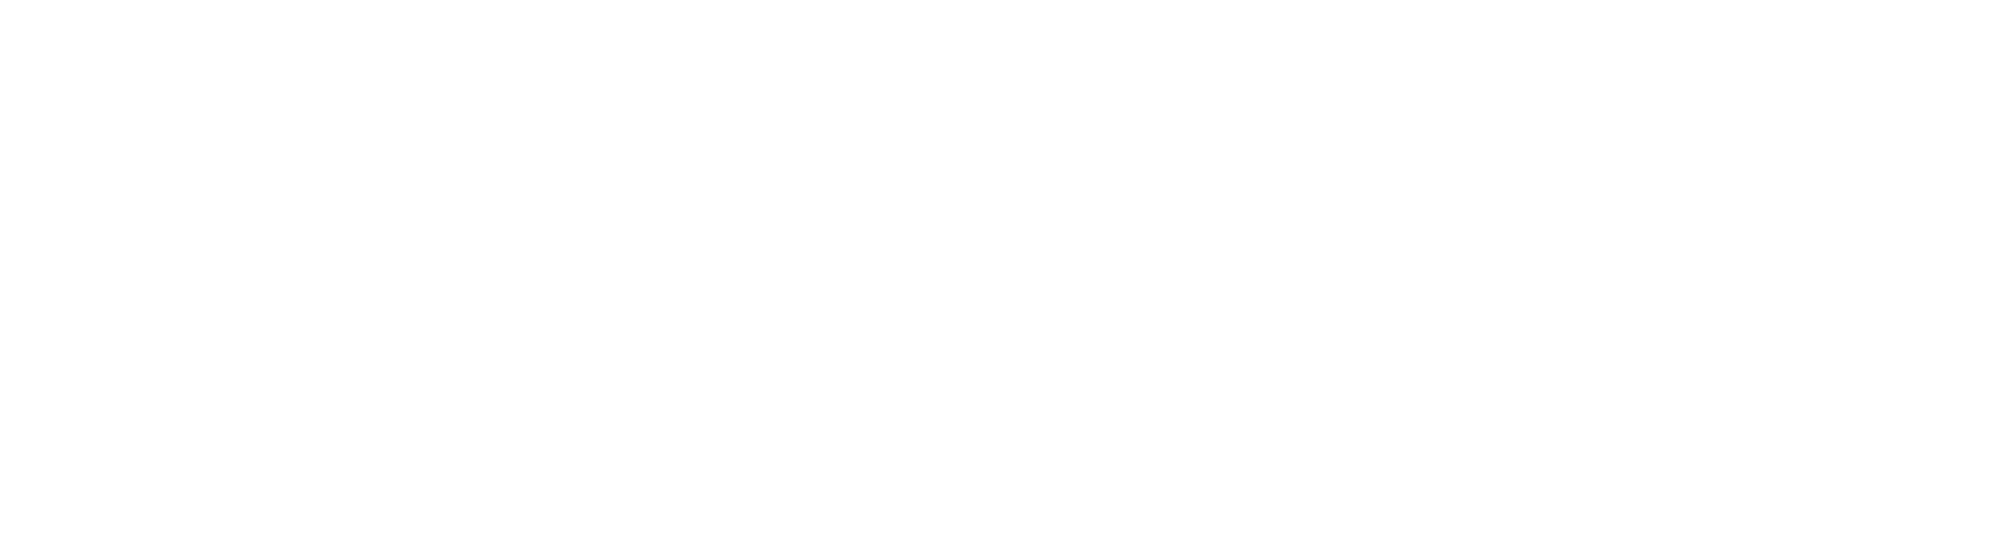 Gibbon_Reinzeichnung_Logo_horizontal_white